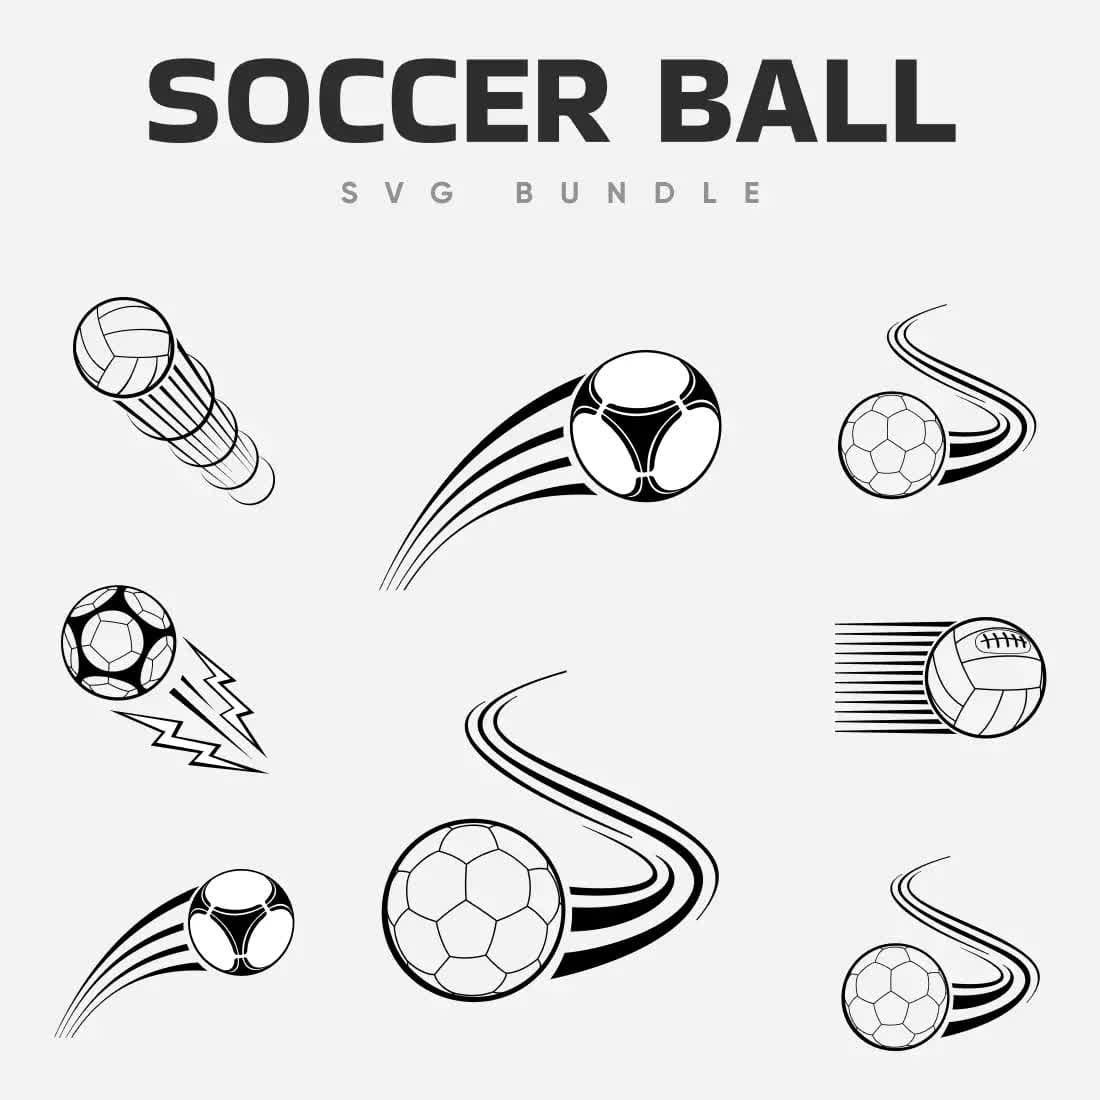 Soccer Ball SVG Bundle Preview 1.